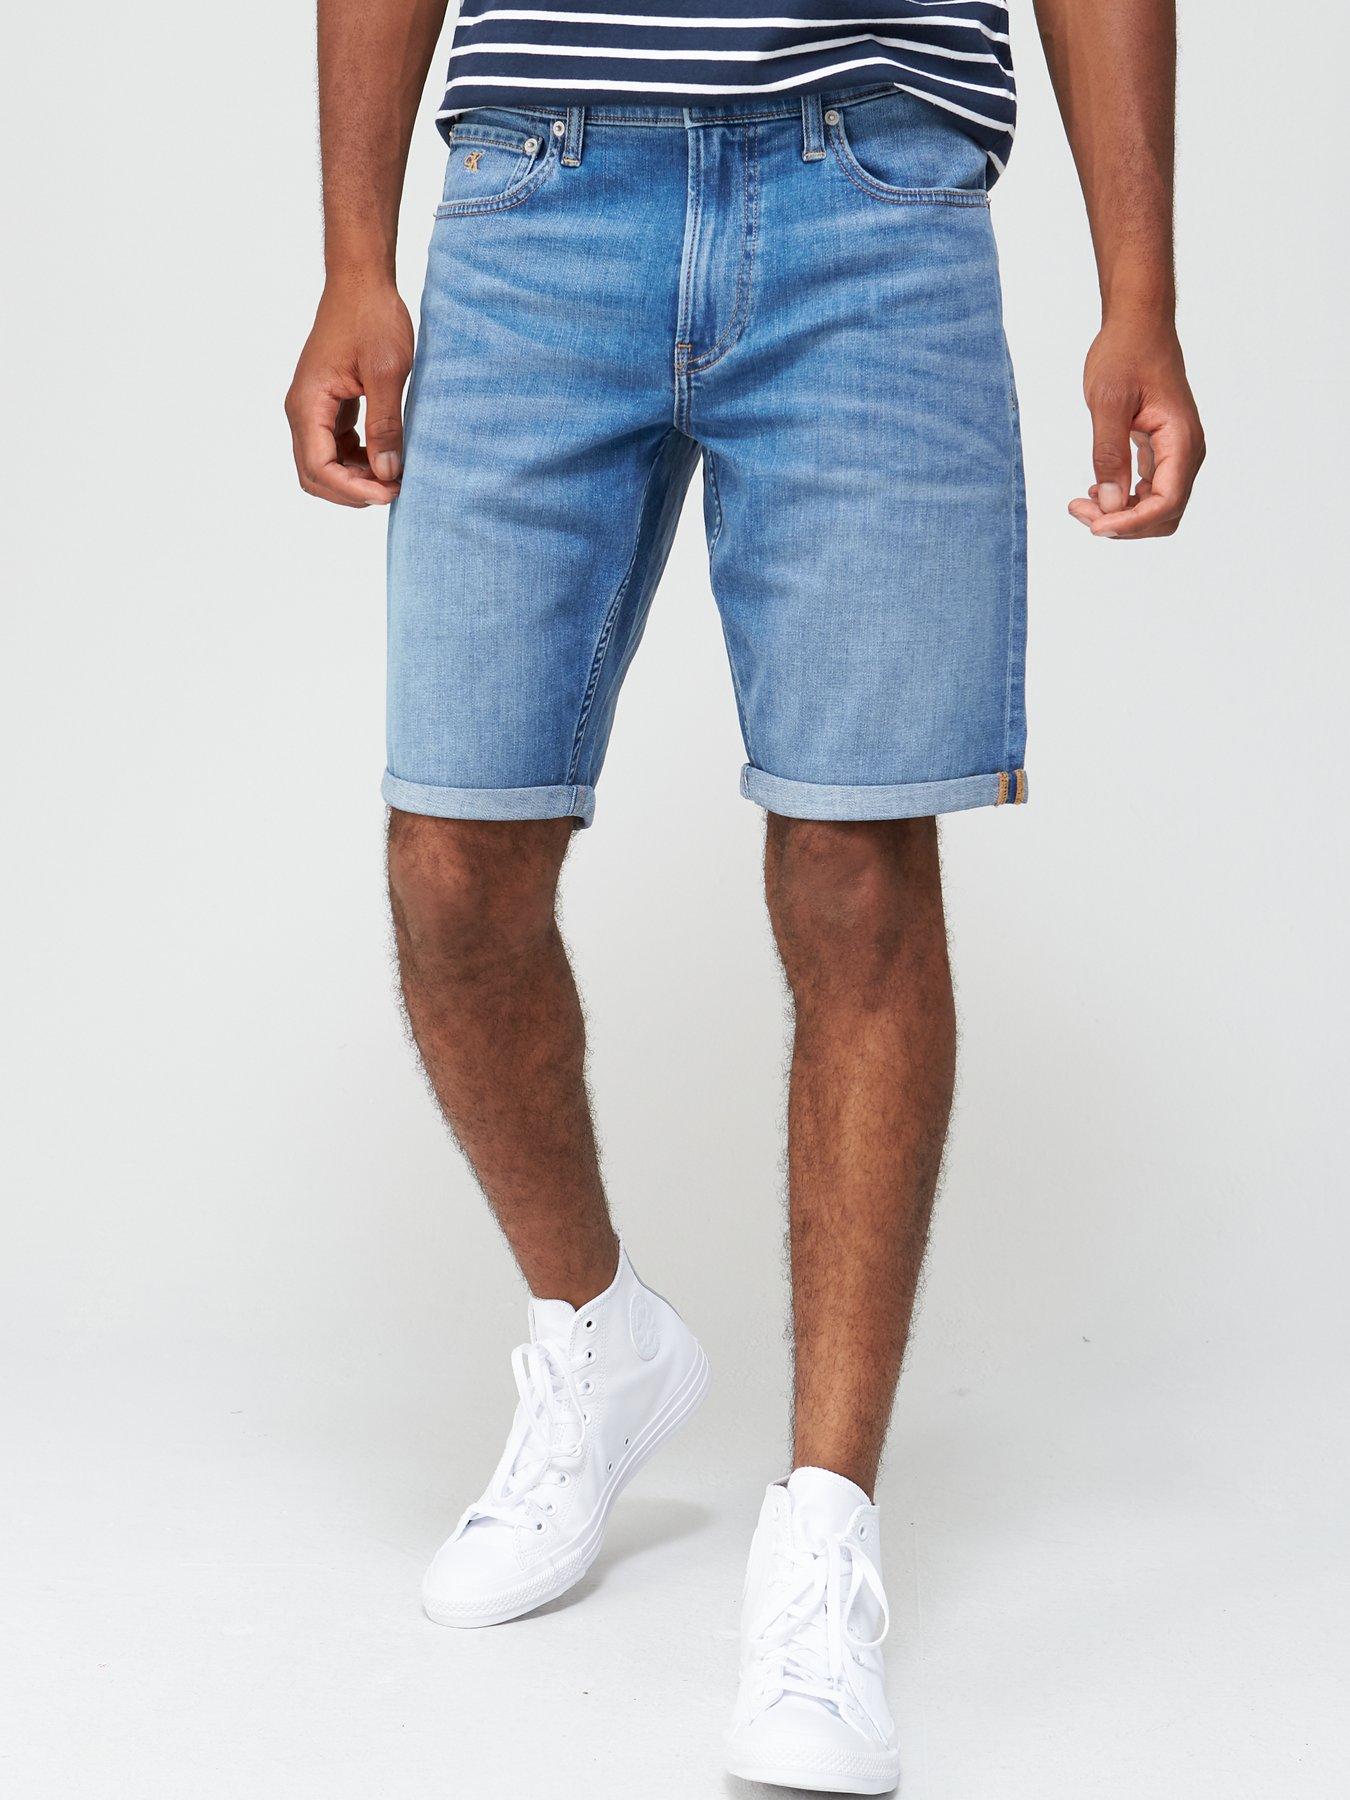 bright blue denim shorts